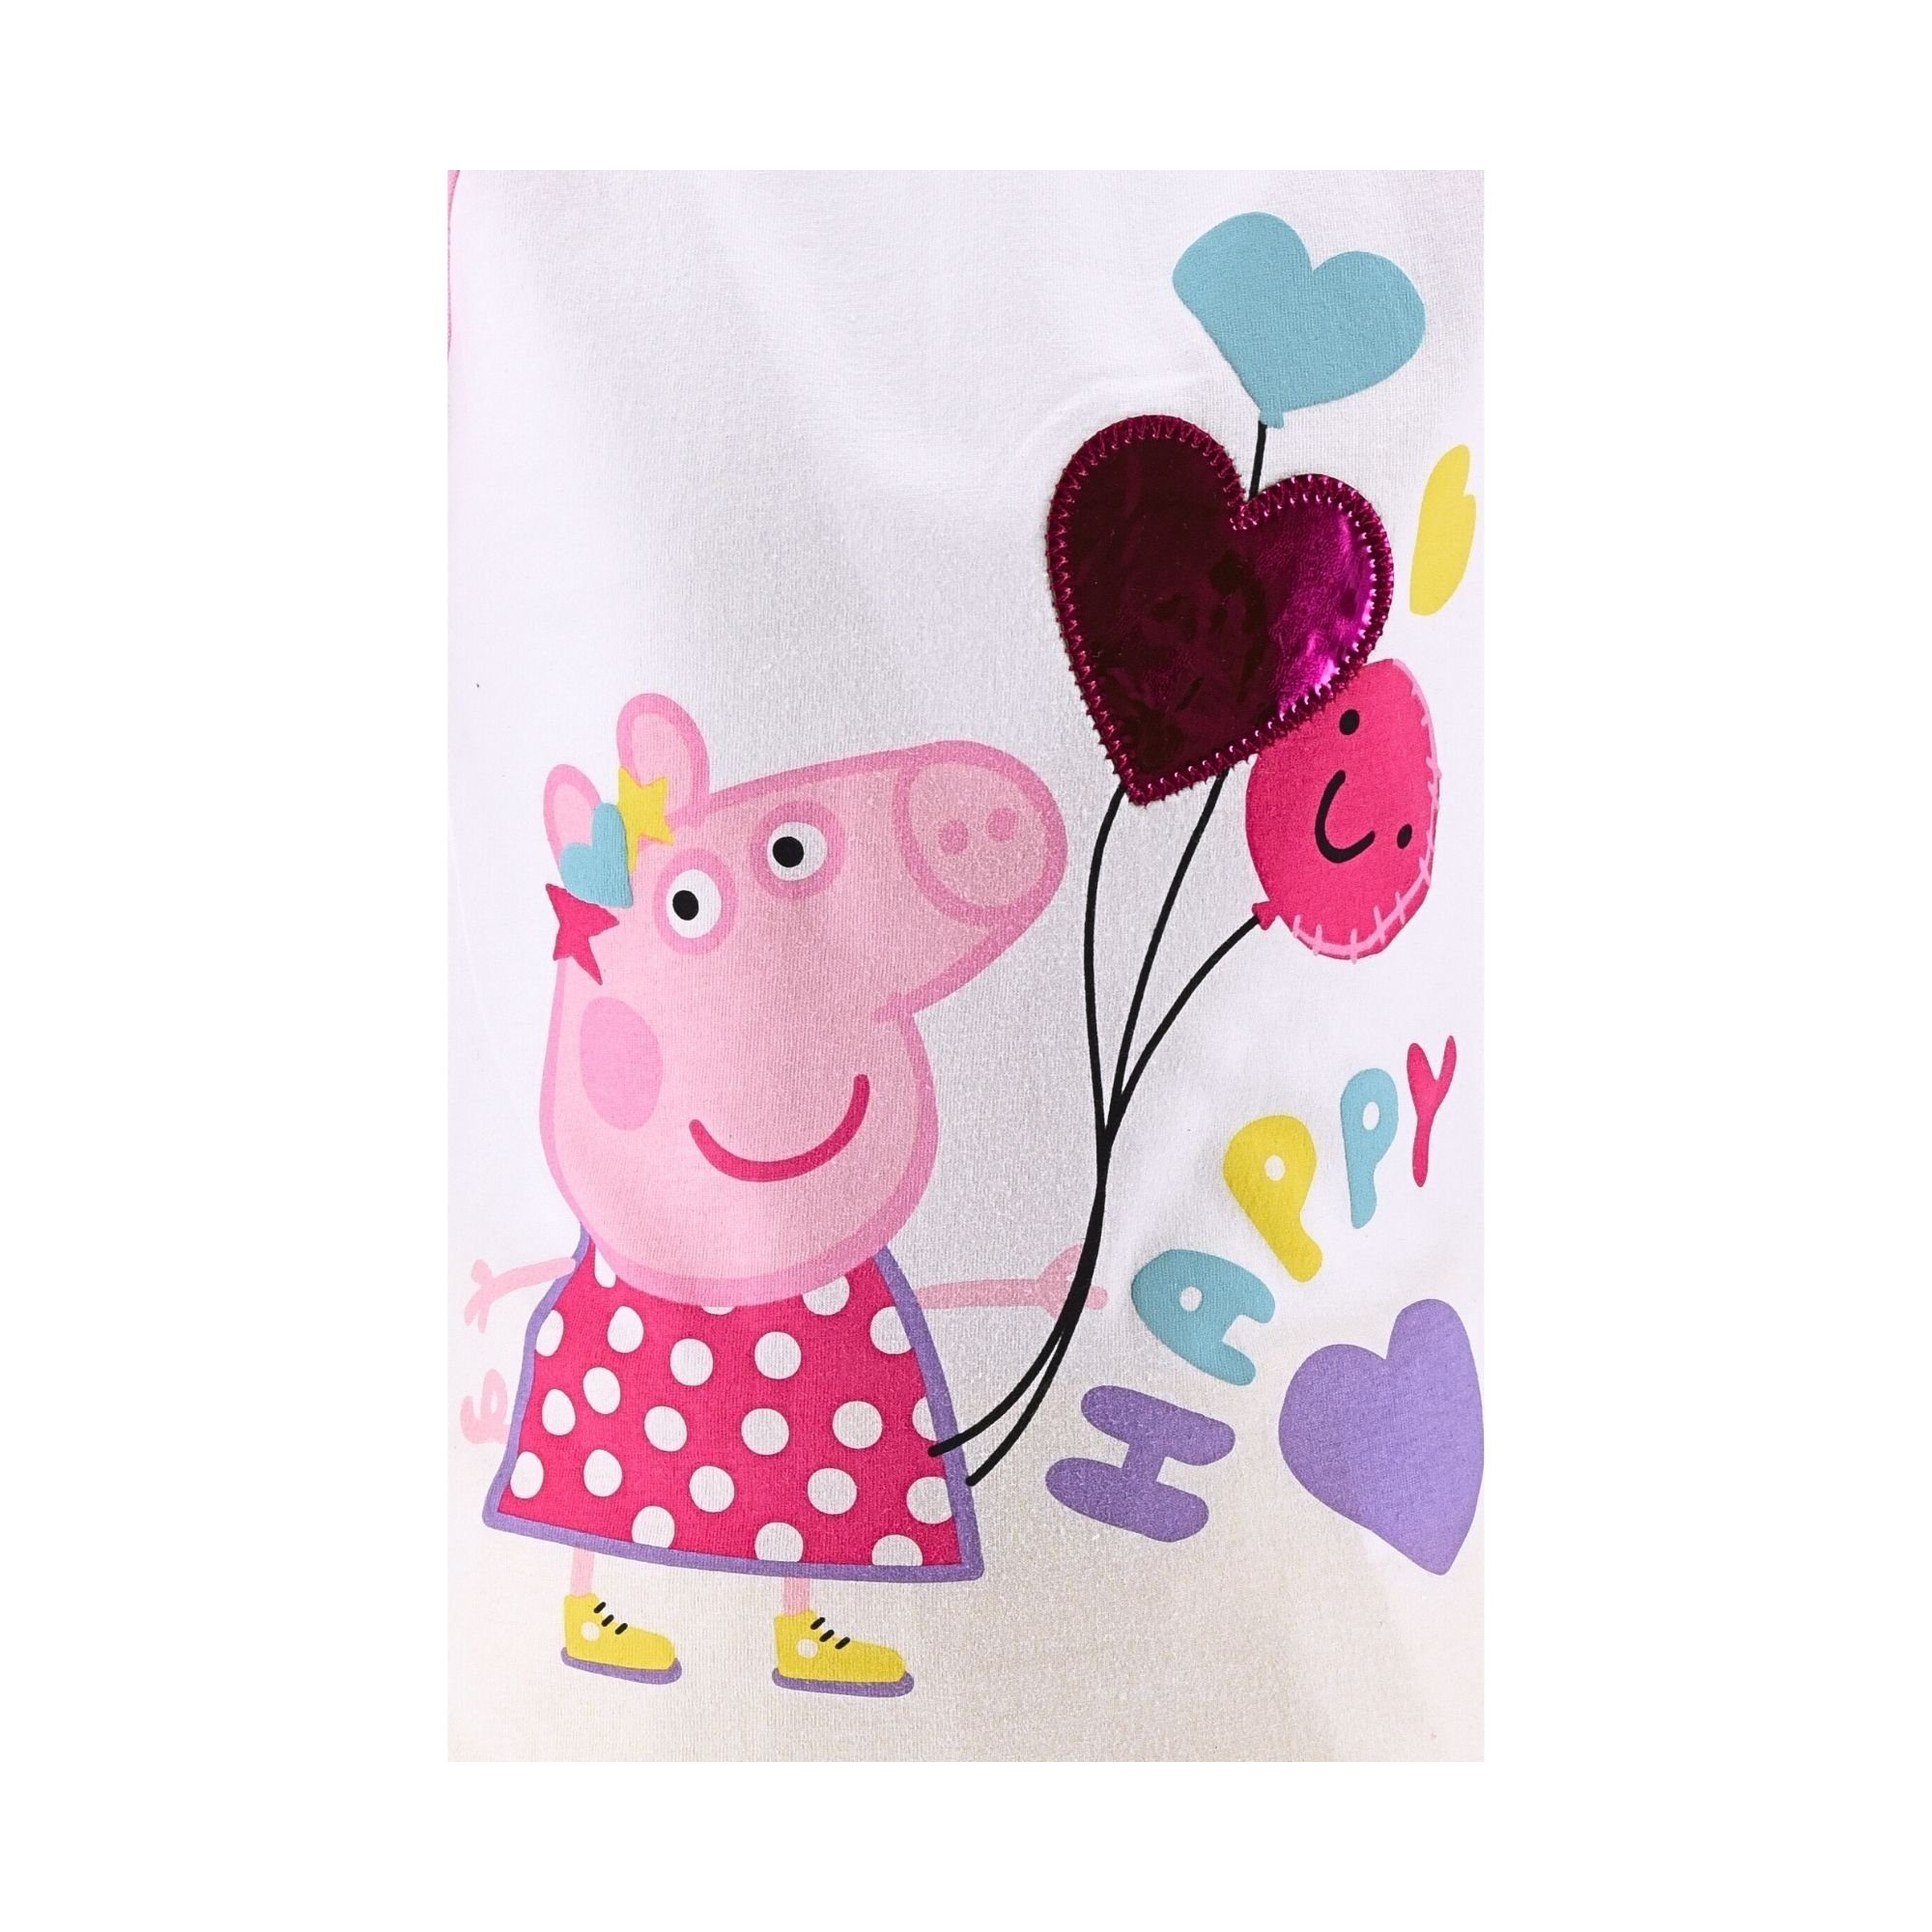 Peppa Peppa Sommeroutfit Pig T-Shirt & Mädchen - (2-tlg) Wutz 98 Gelb Shorts Gr. 116 cm